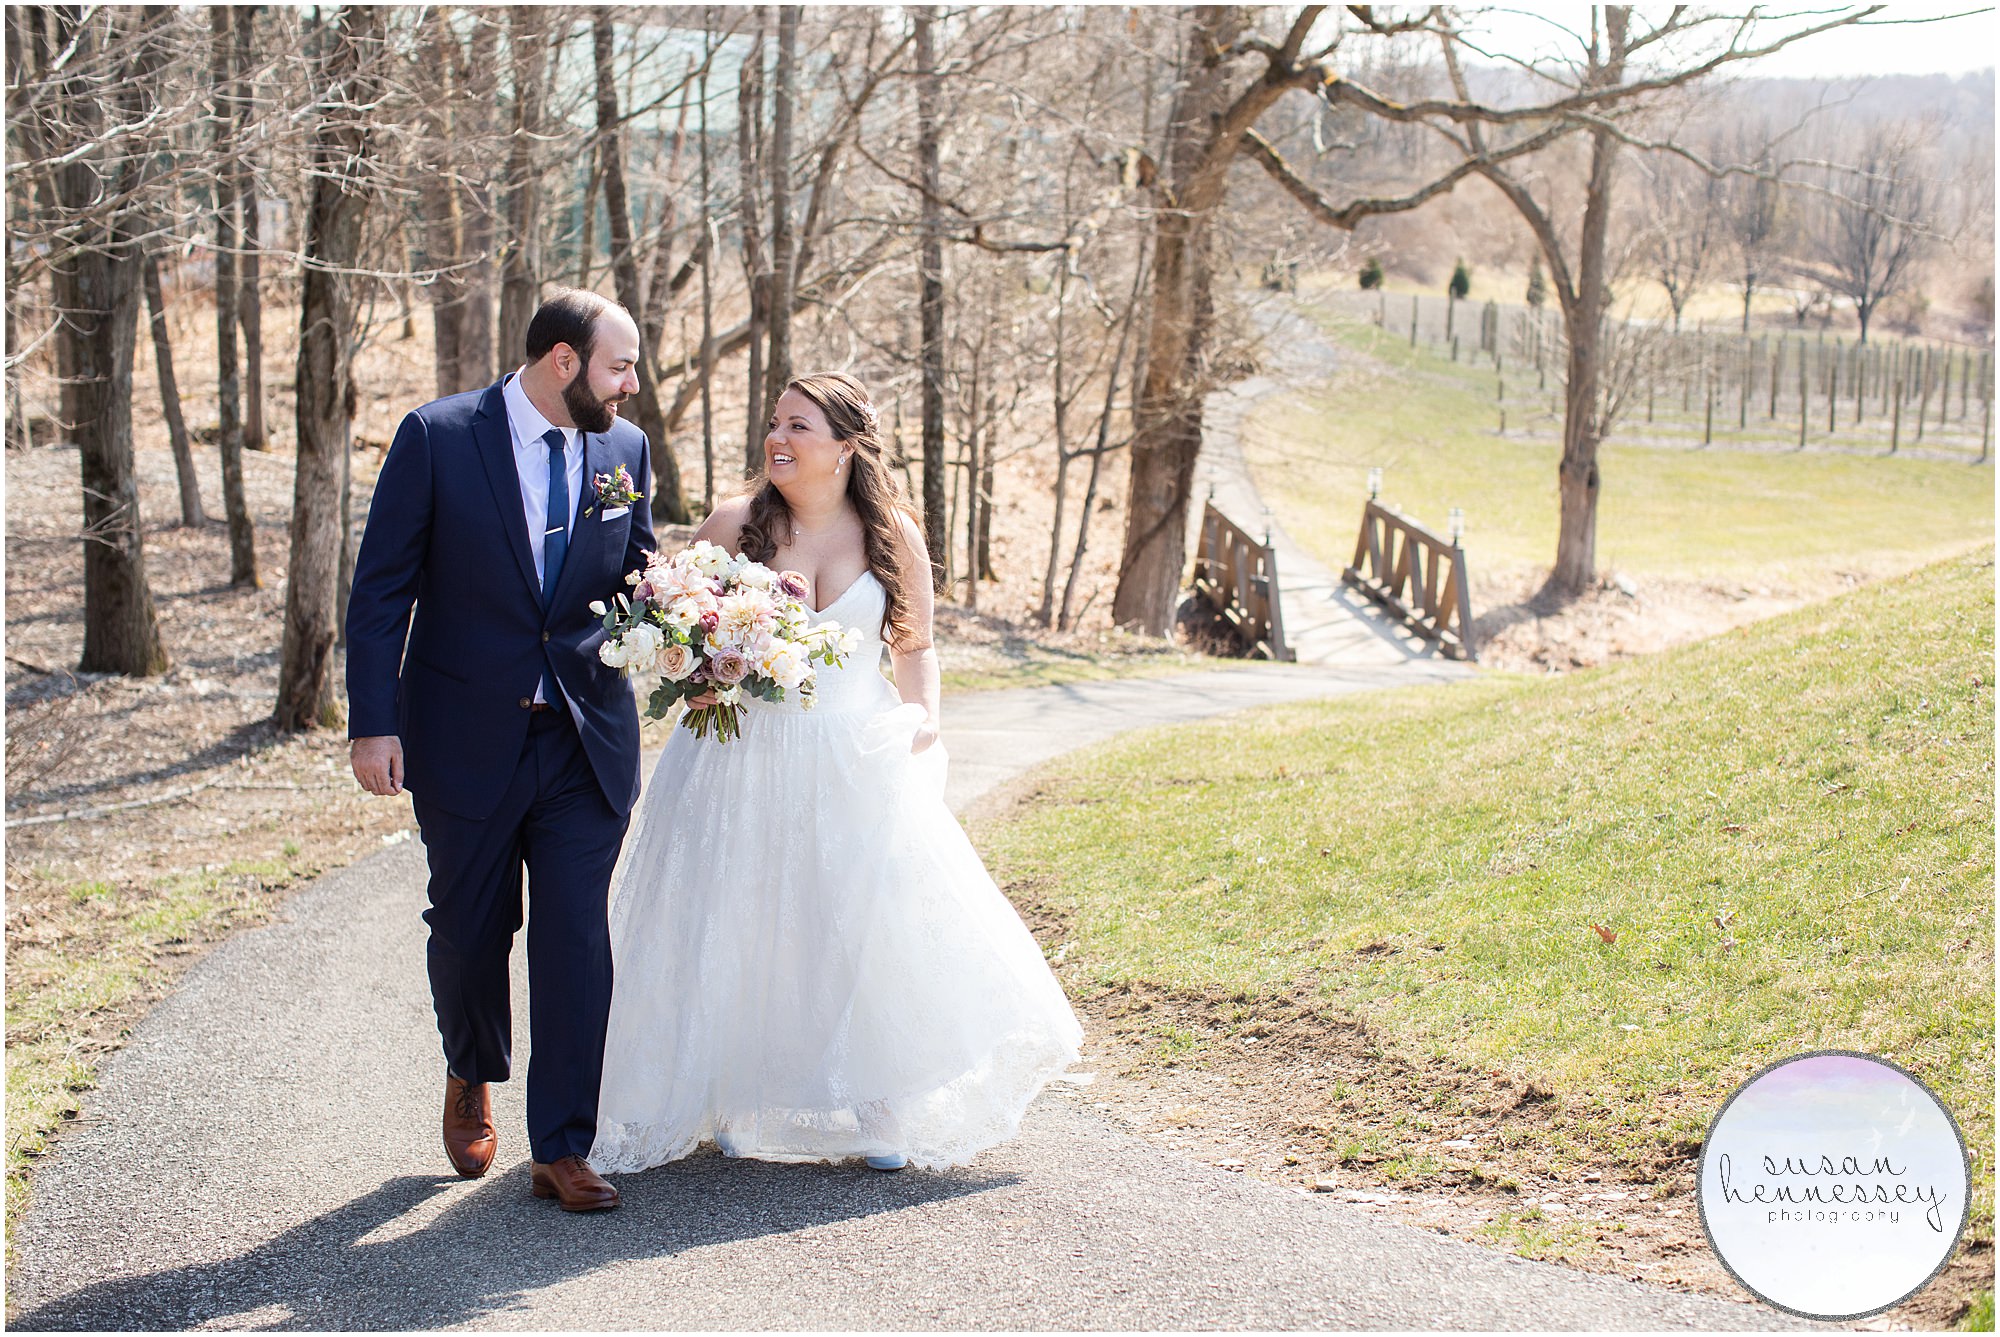 Bear Brook Valley Wedding | Fredon Township, NJ | Jessica & Jeff